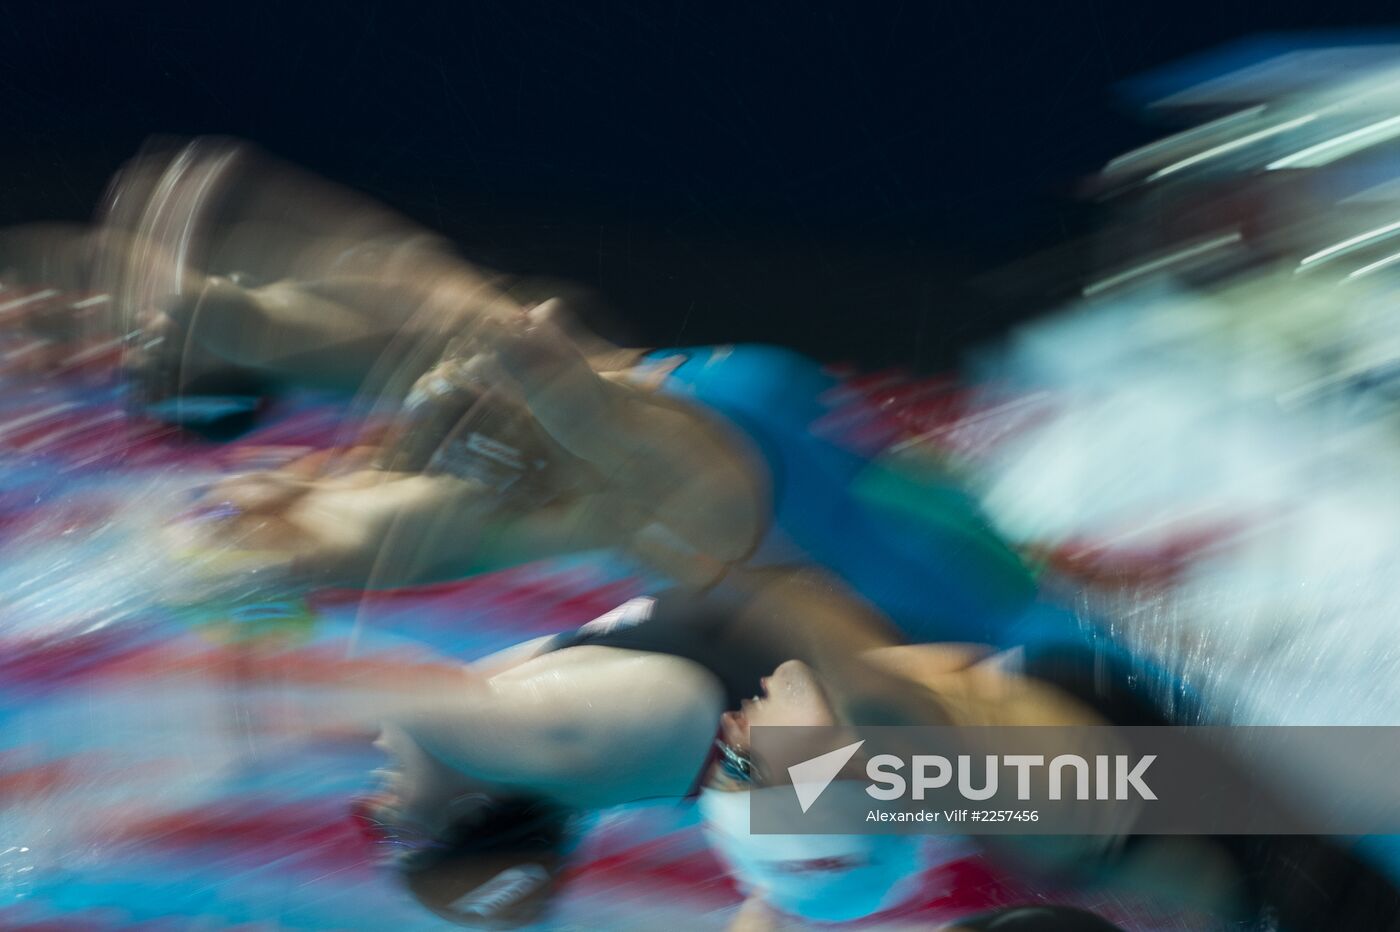 FINA World Aquatics Championships. 14th day. Swimming